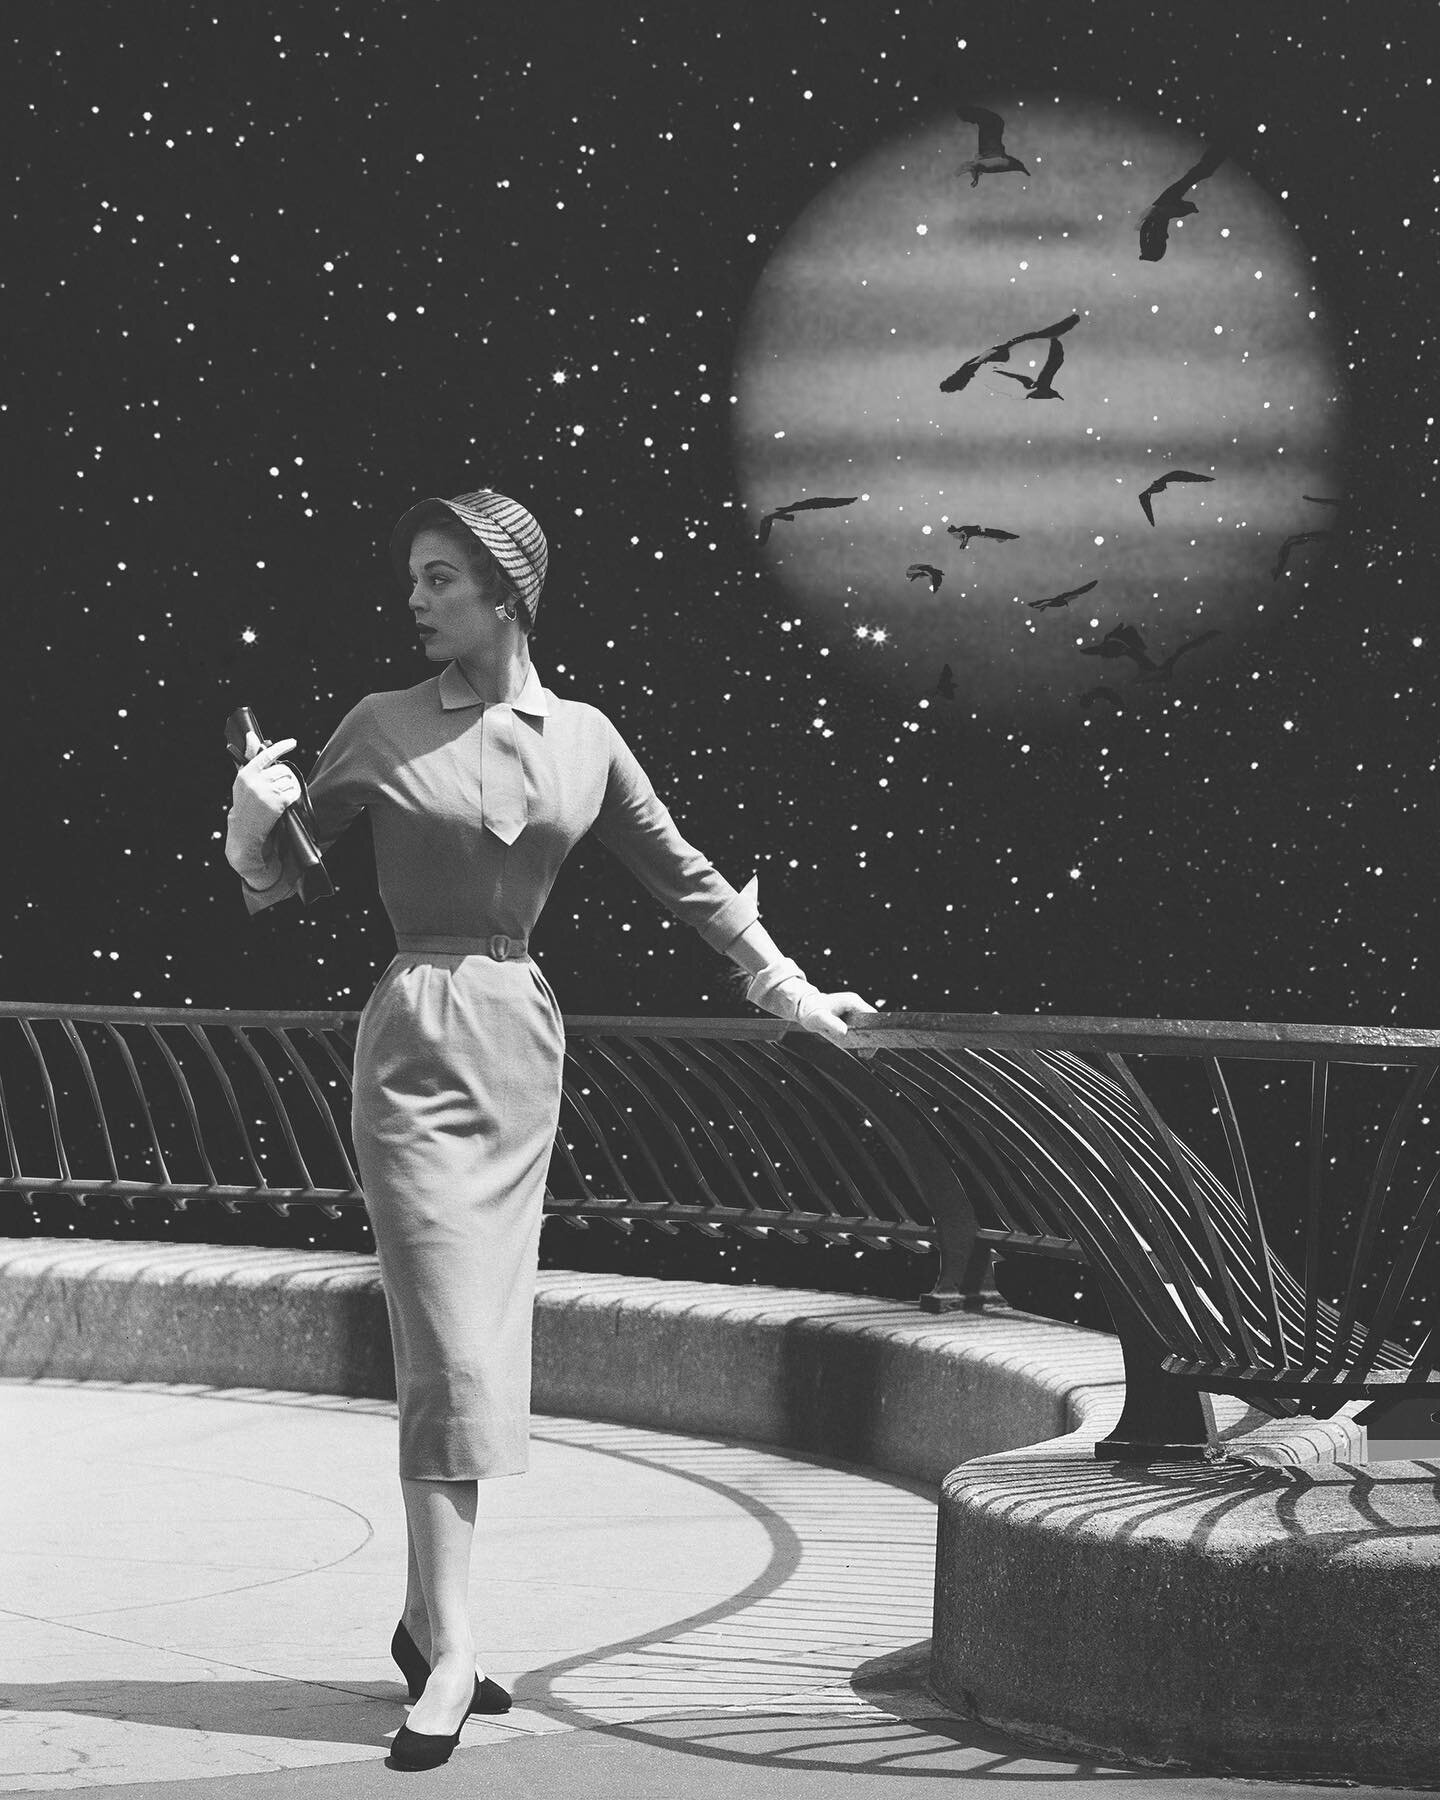 Catch Her If You Can&hellip; 

.
.
.
.
#collageart #vintagemagazine #vintagechanel #spaceart #catchherifyoucan #surrealism #nashvilleartist #nashvilleart